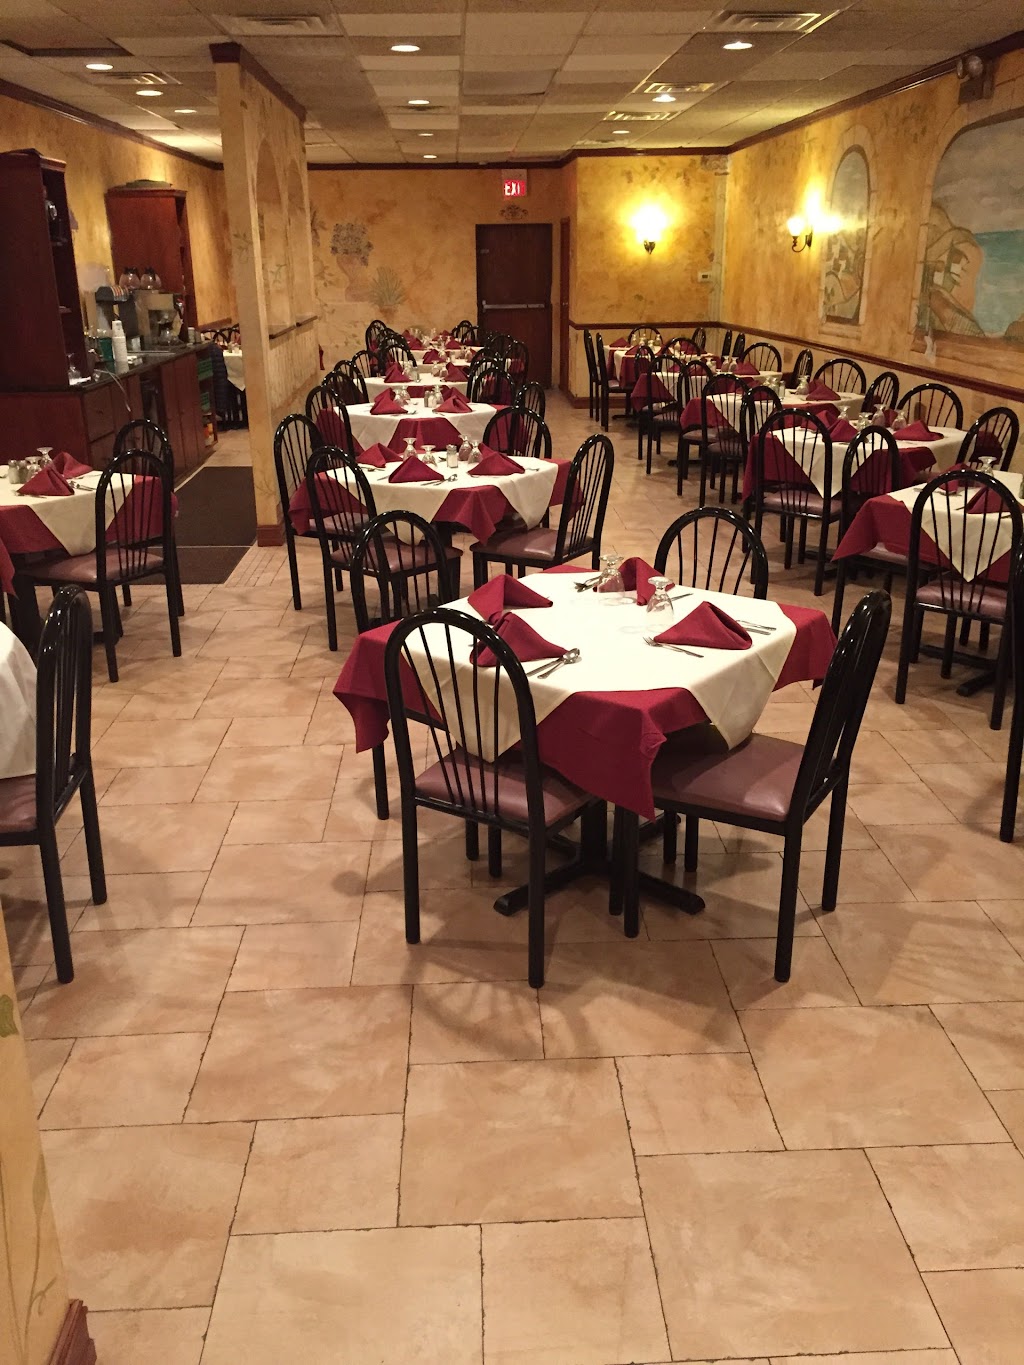 Dusals Italian Restaurant and Pizzeria | 340 Union Hill Rd, Manalapan Township, NJ 07726 | Phone: (732) 536-4089